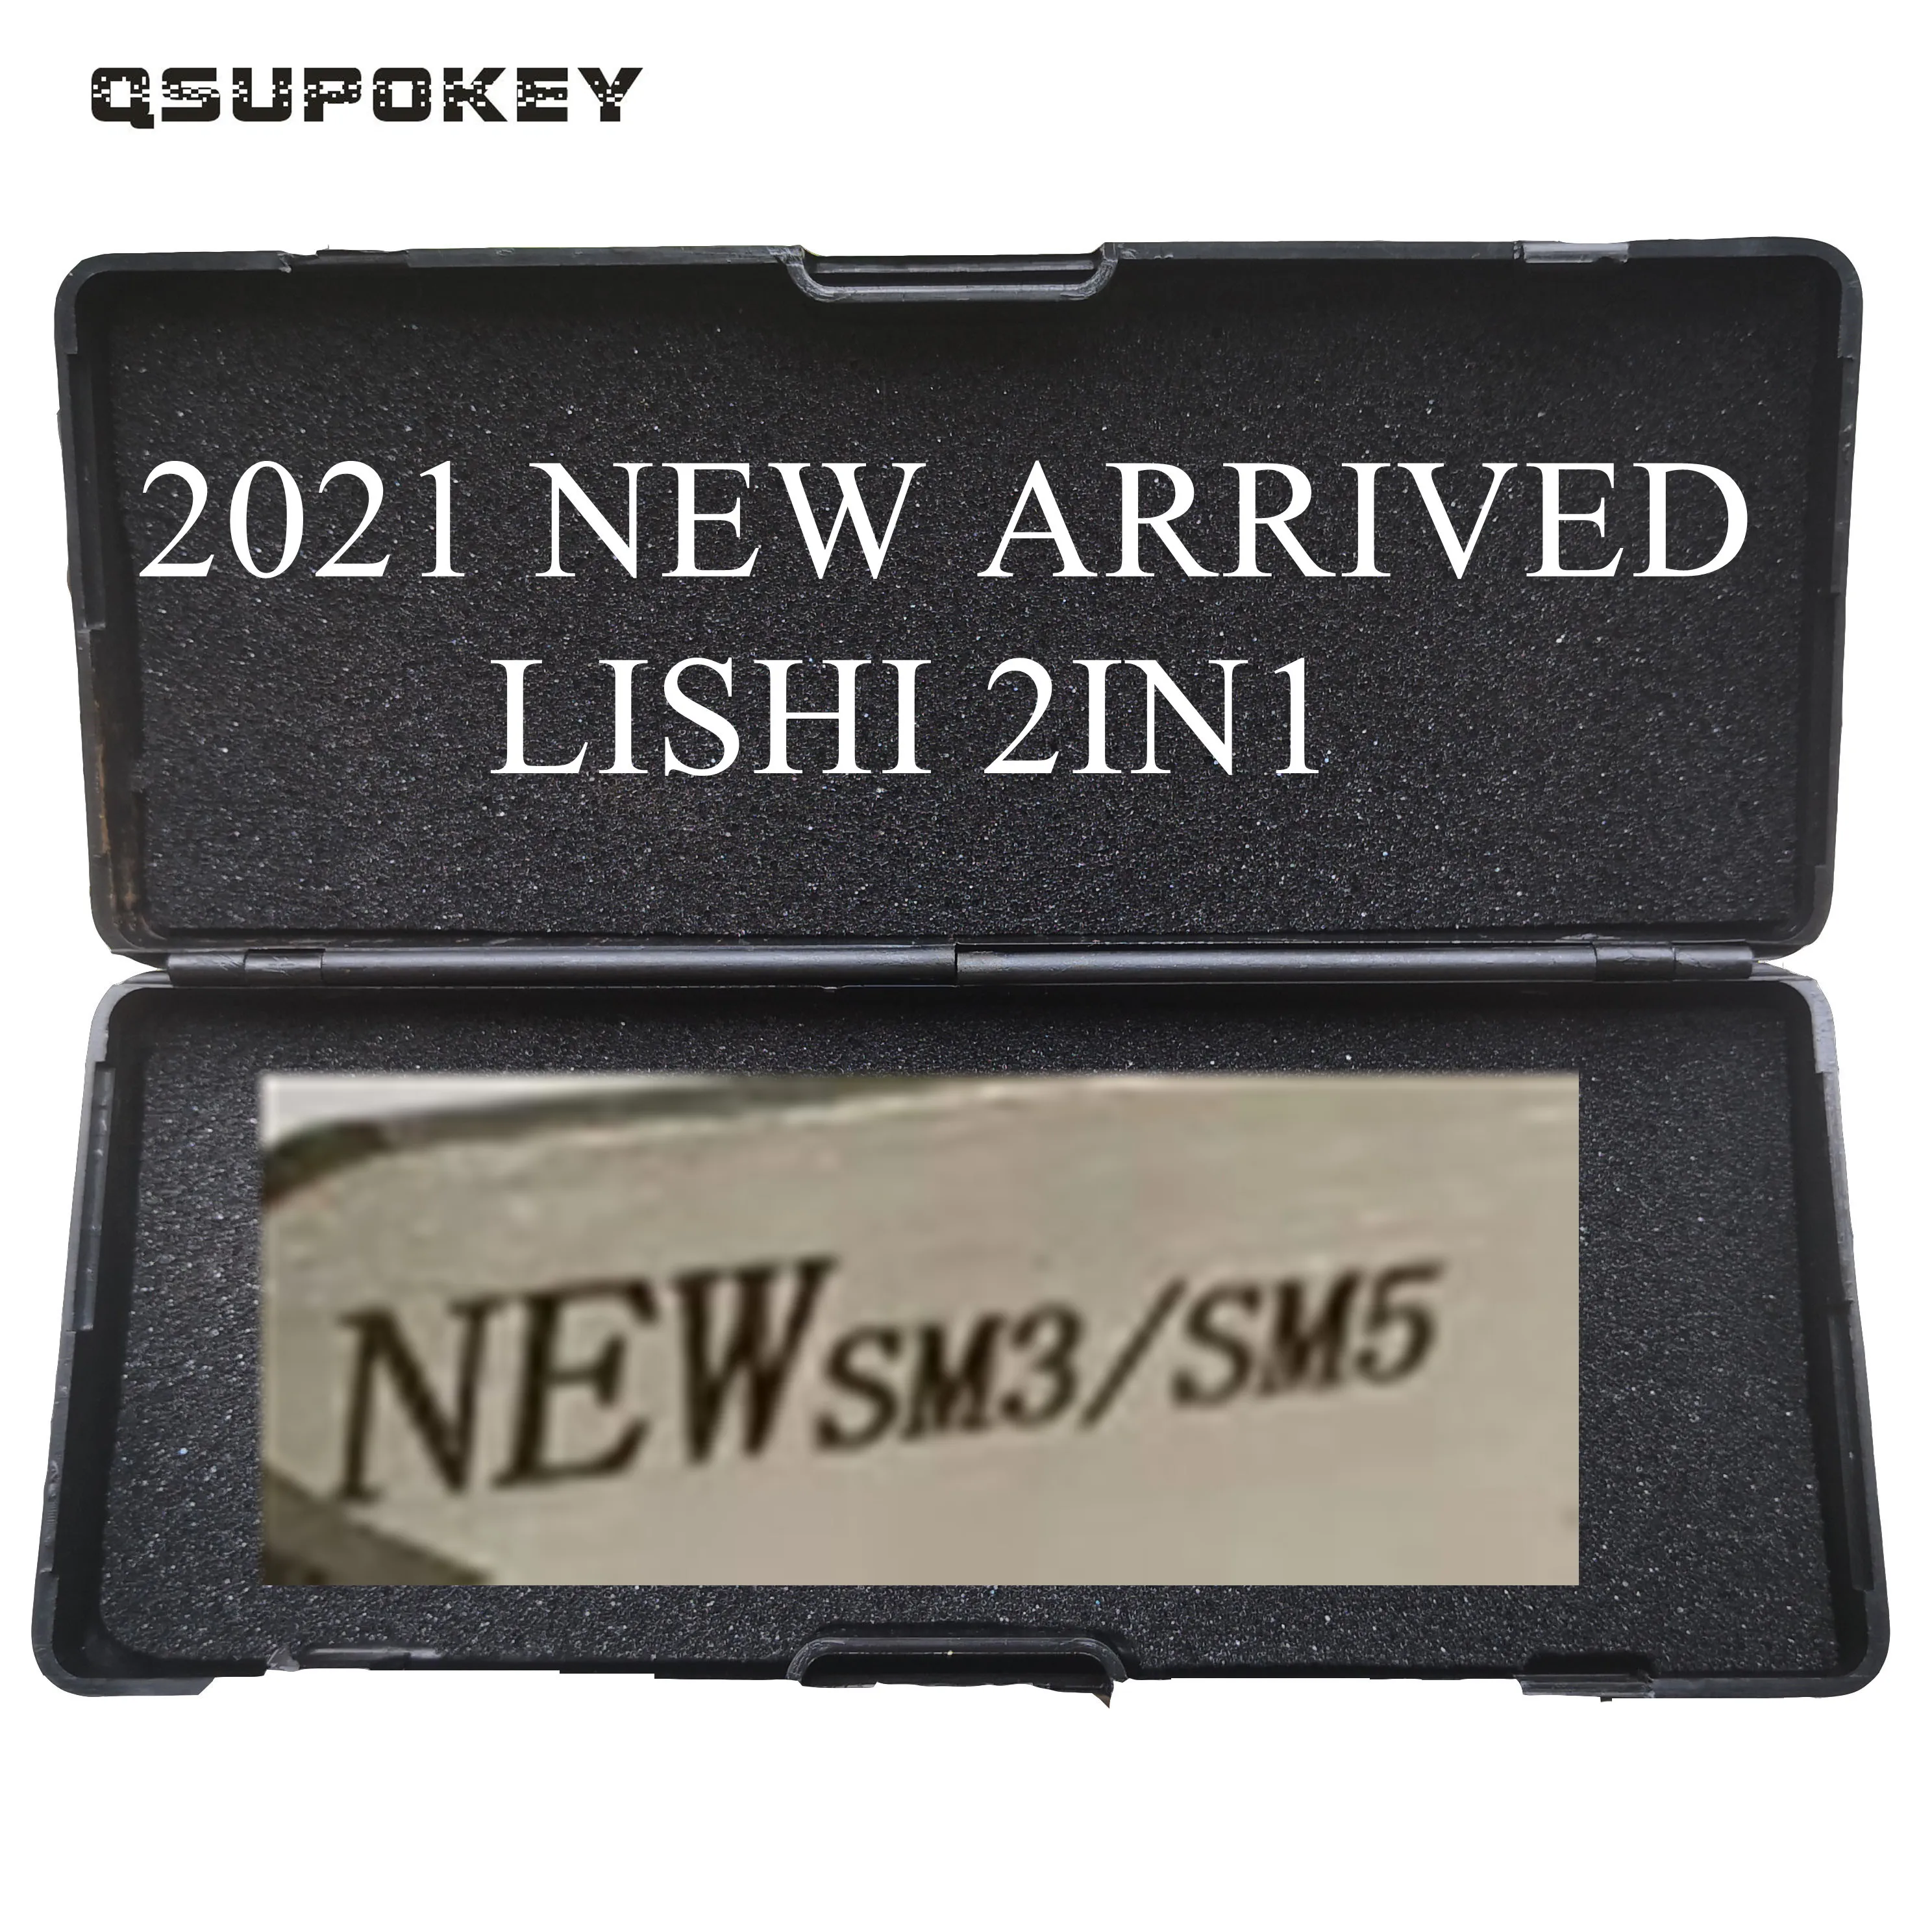 

QSUPOKEY 2021 NEW ARRIVED Original LiShi 2in1 repair Tool Locksmith Tools NEW(SM3/SM5) for Korea Lock